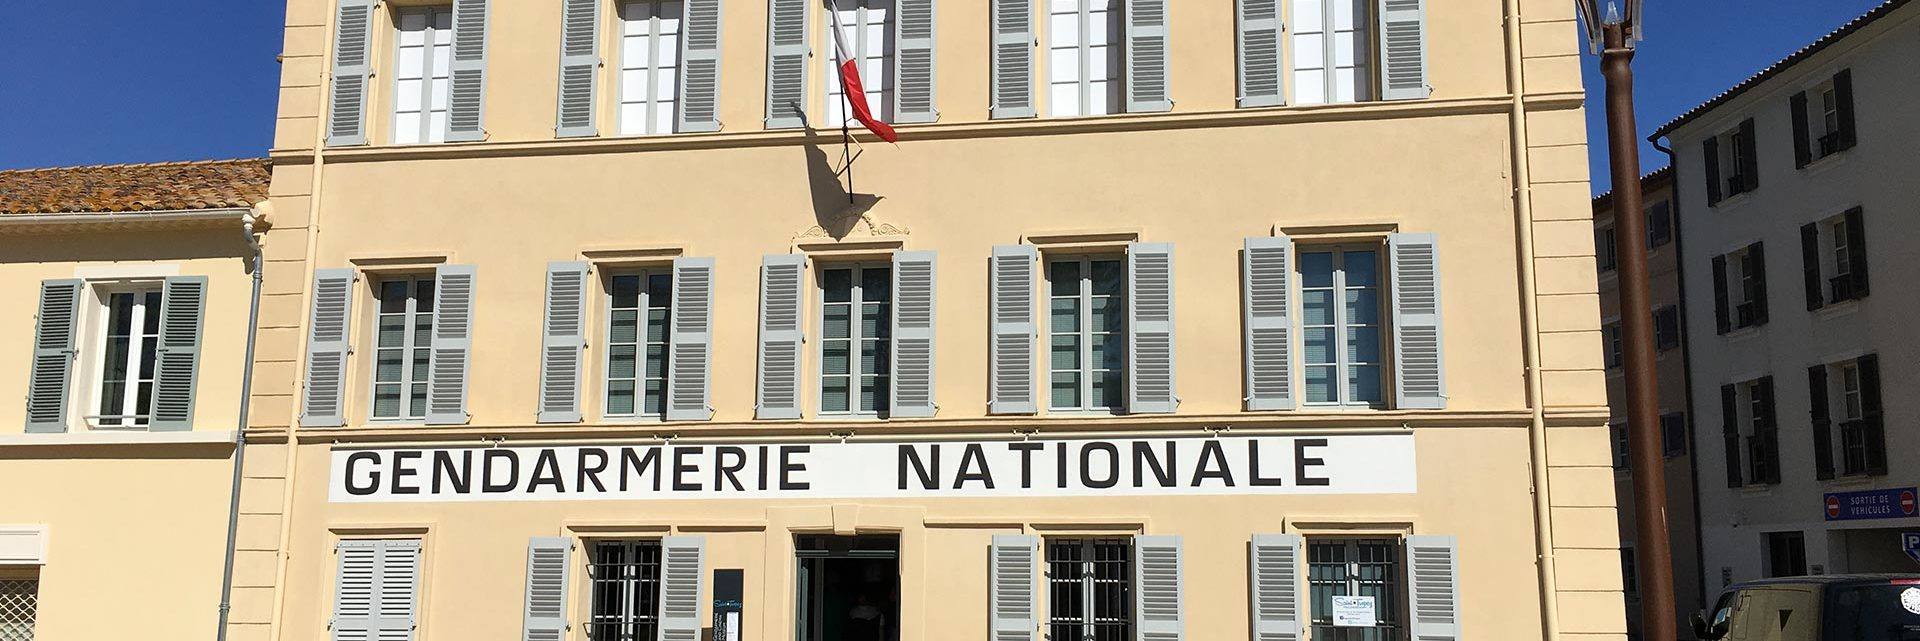 The Gendarmerie and Cinema Museum in Saint Tropez